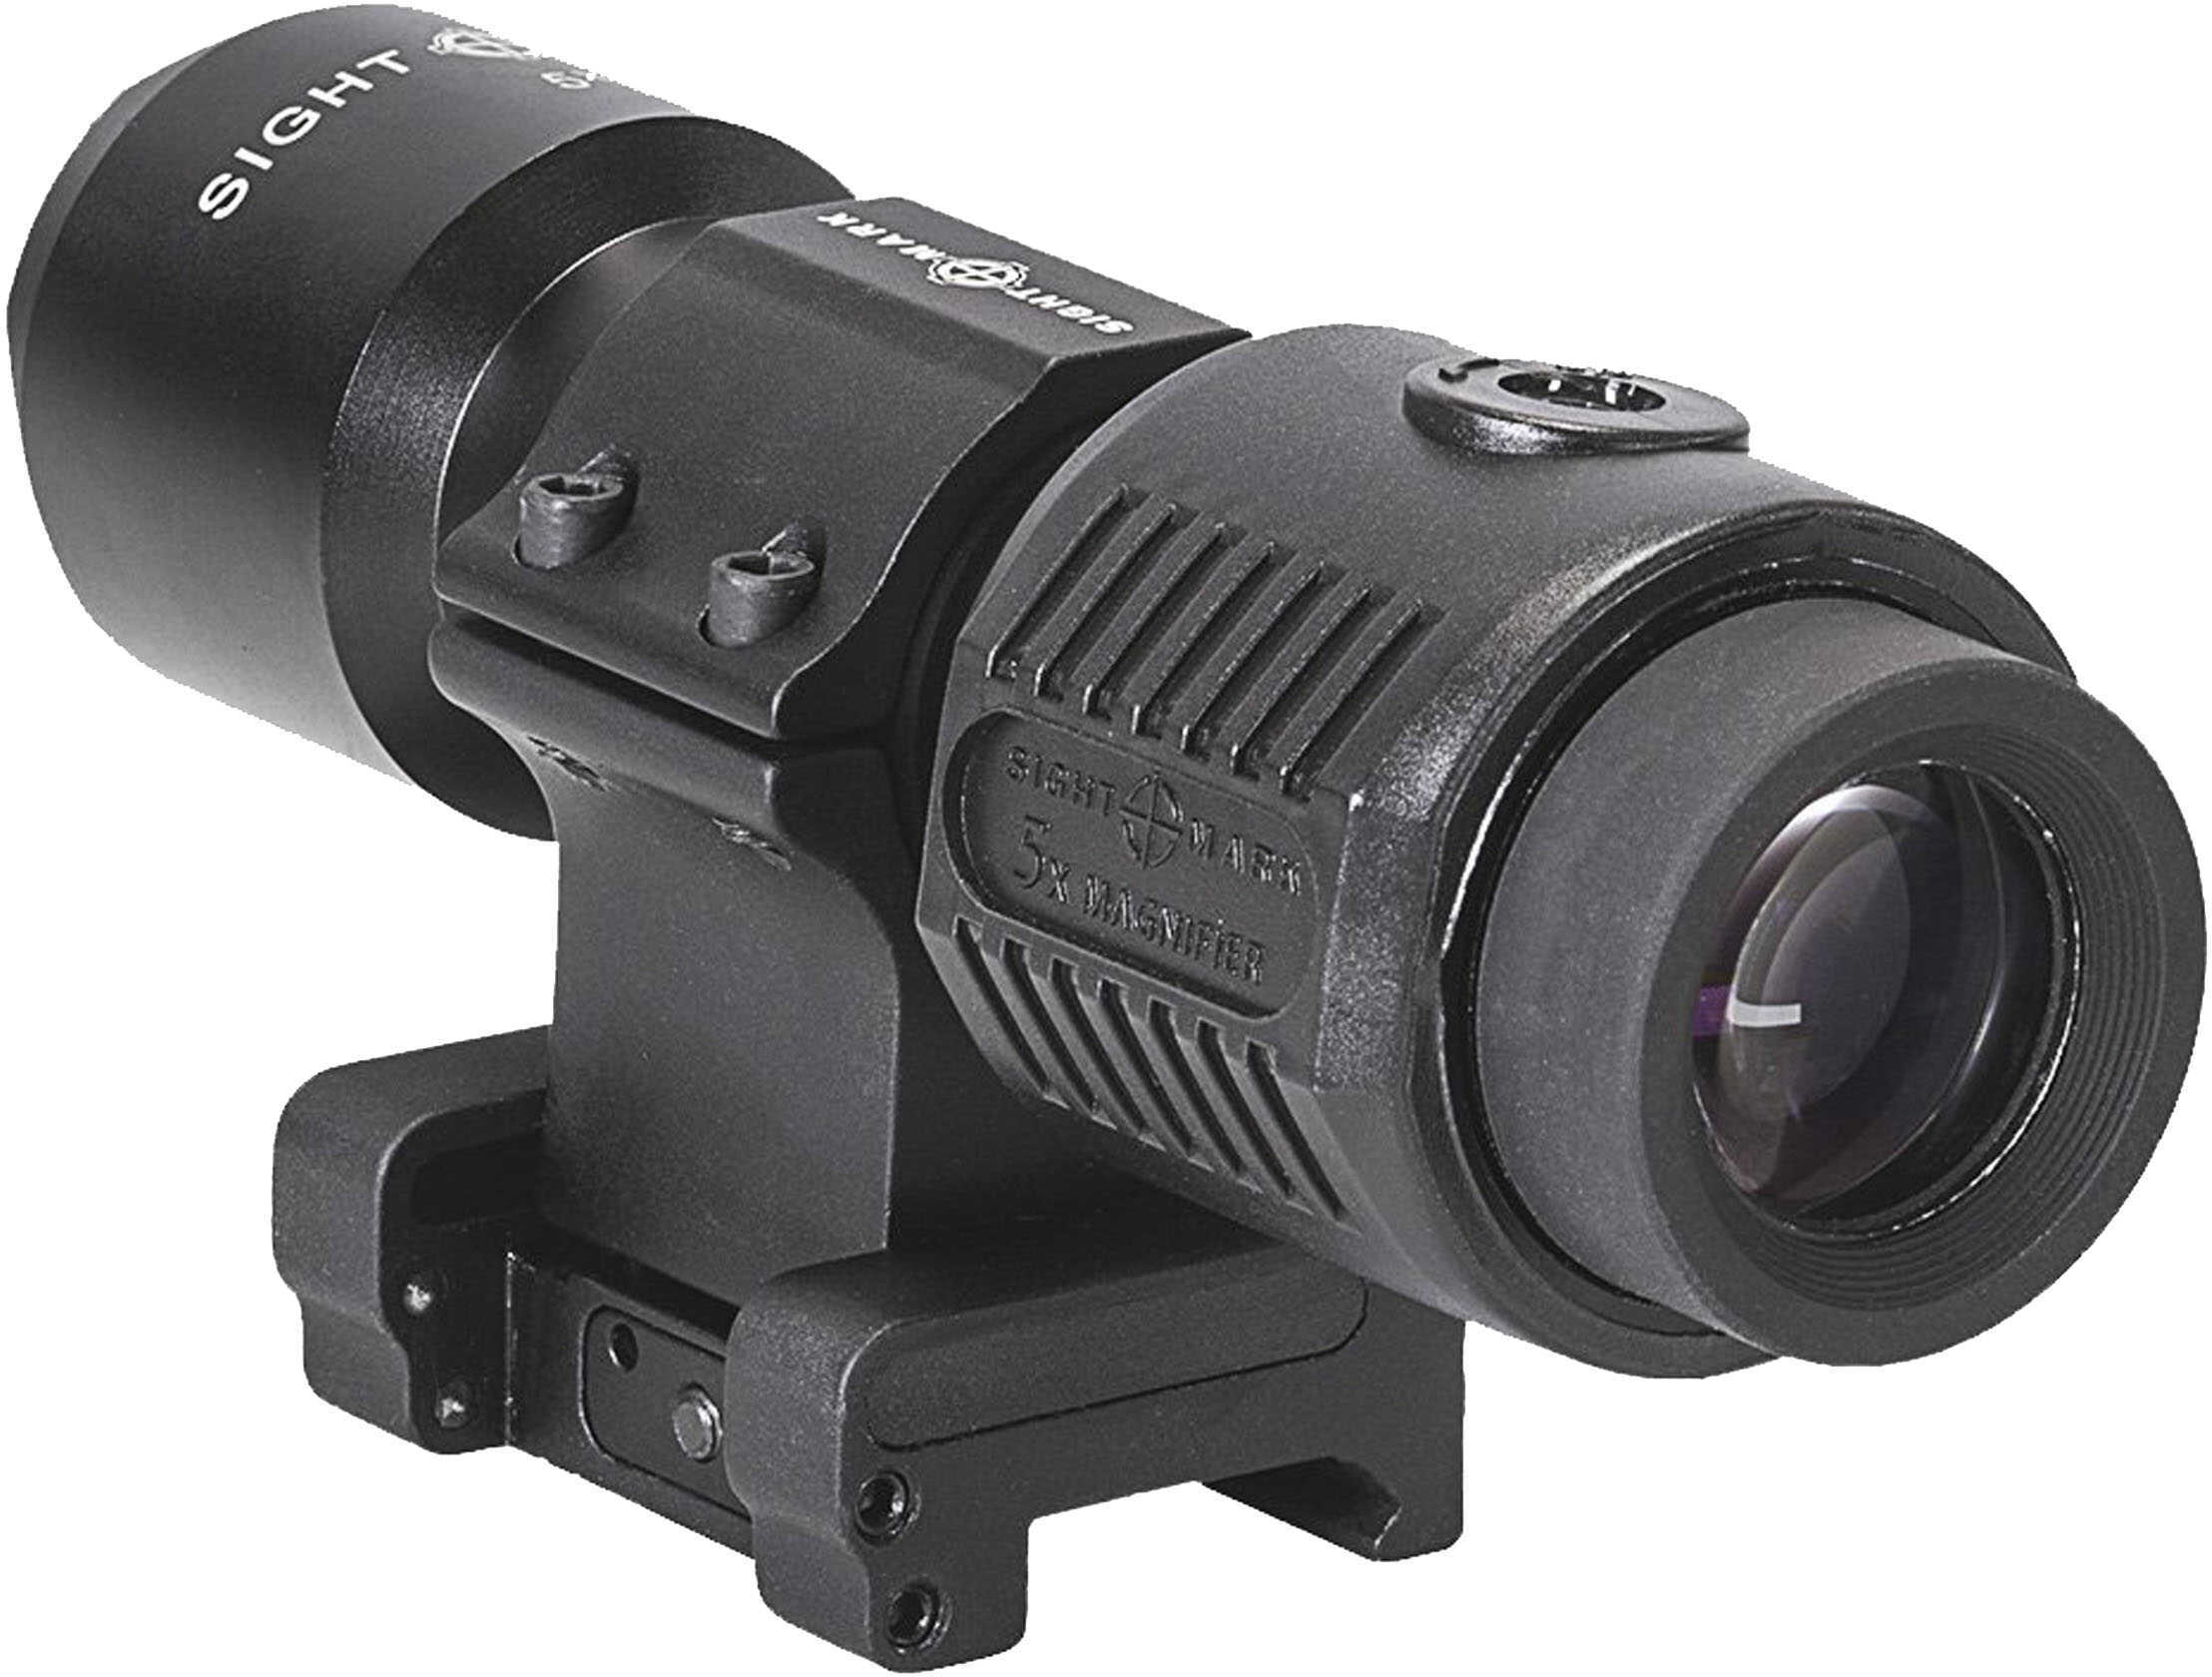 Sightmark Sm19038 Tactical Magnifier 5x 32mm Obj 2.1" Eye Relief Black